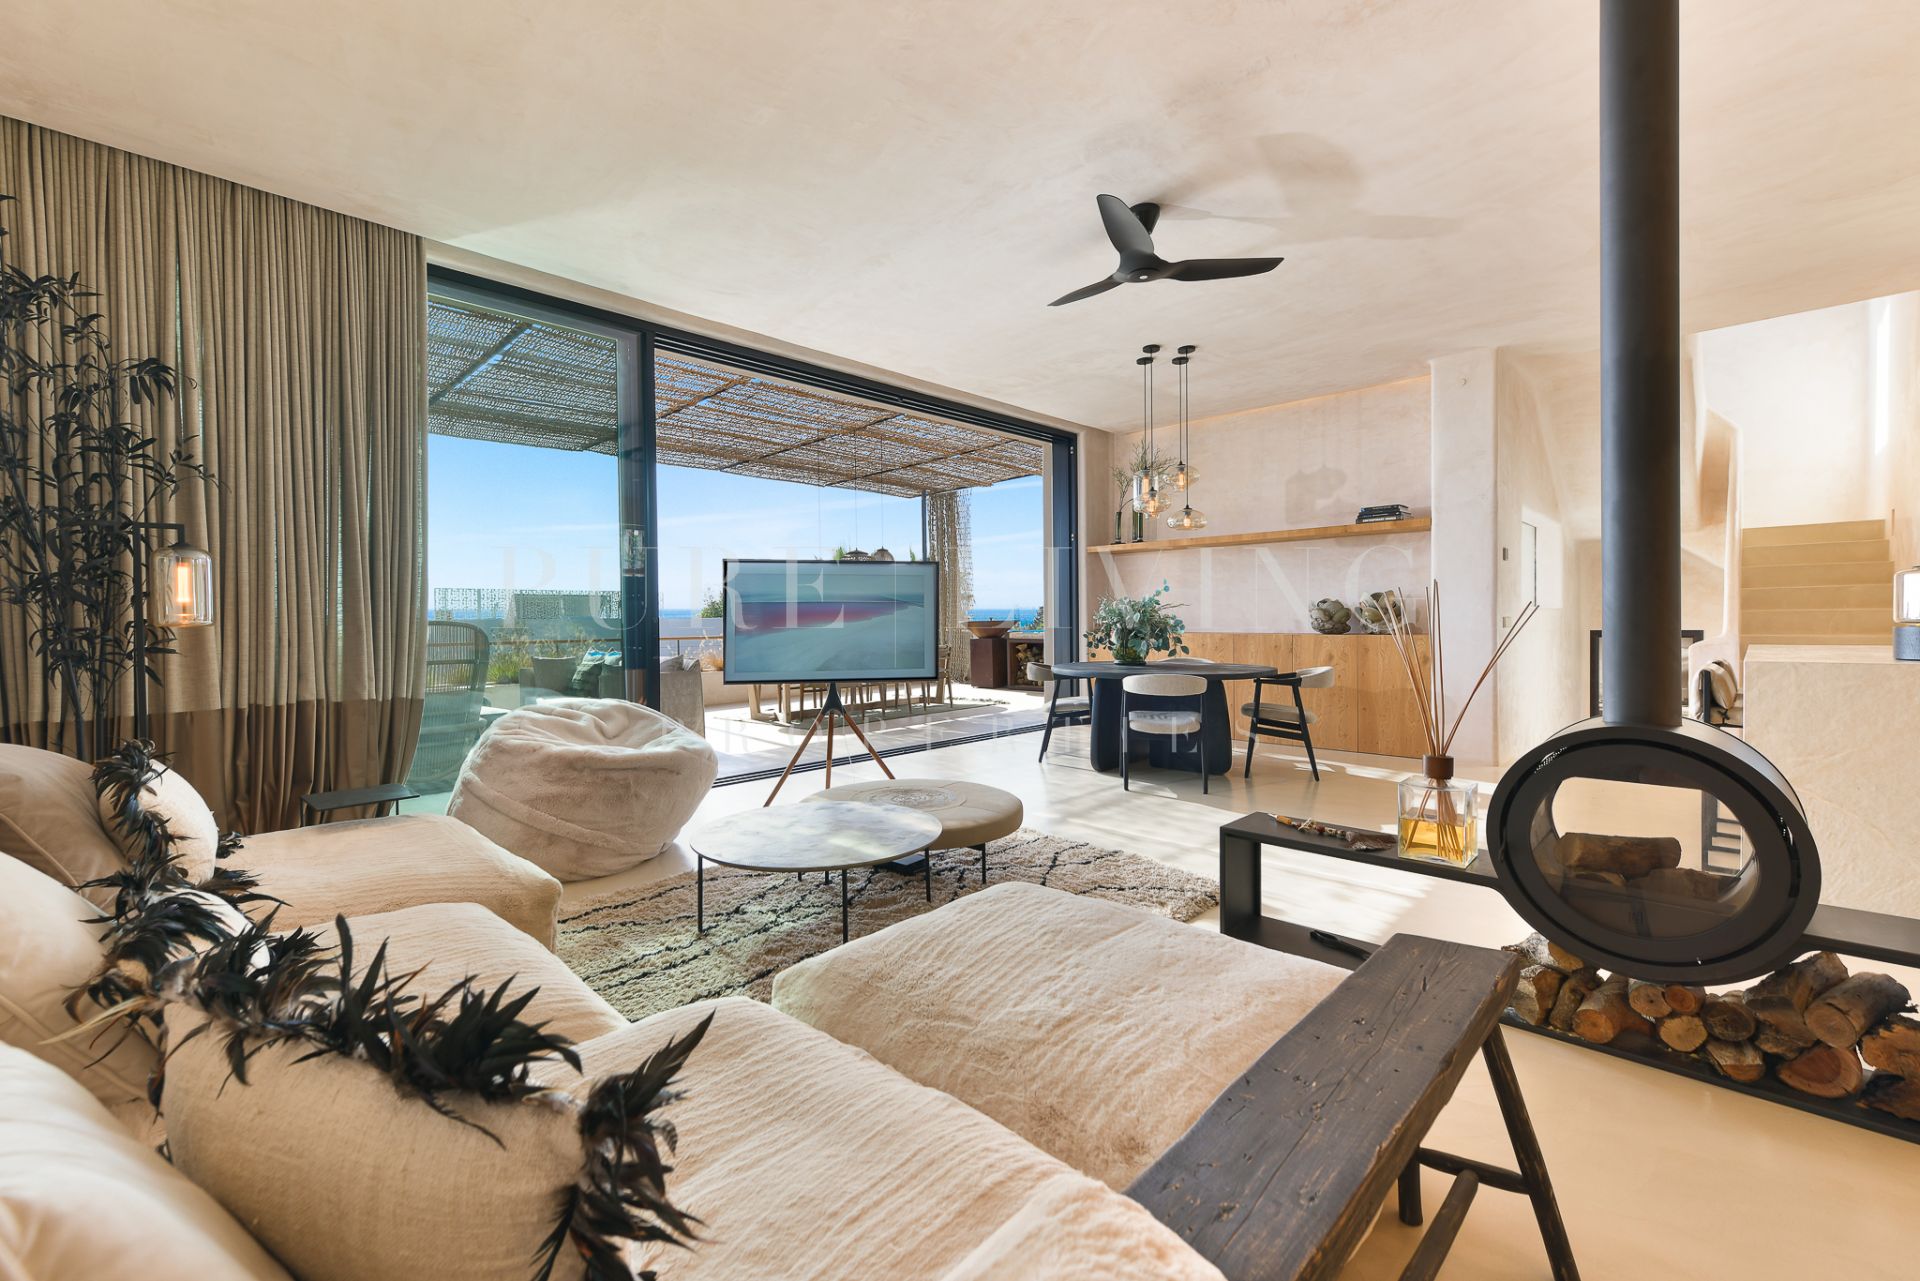 Superbe villa de quatre chambres avec une vue imprenable sur la mer, près de la plage de Marbesa, Marbella Est.